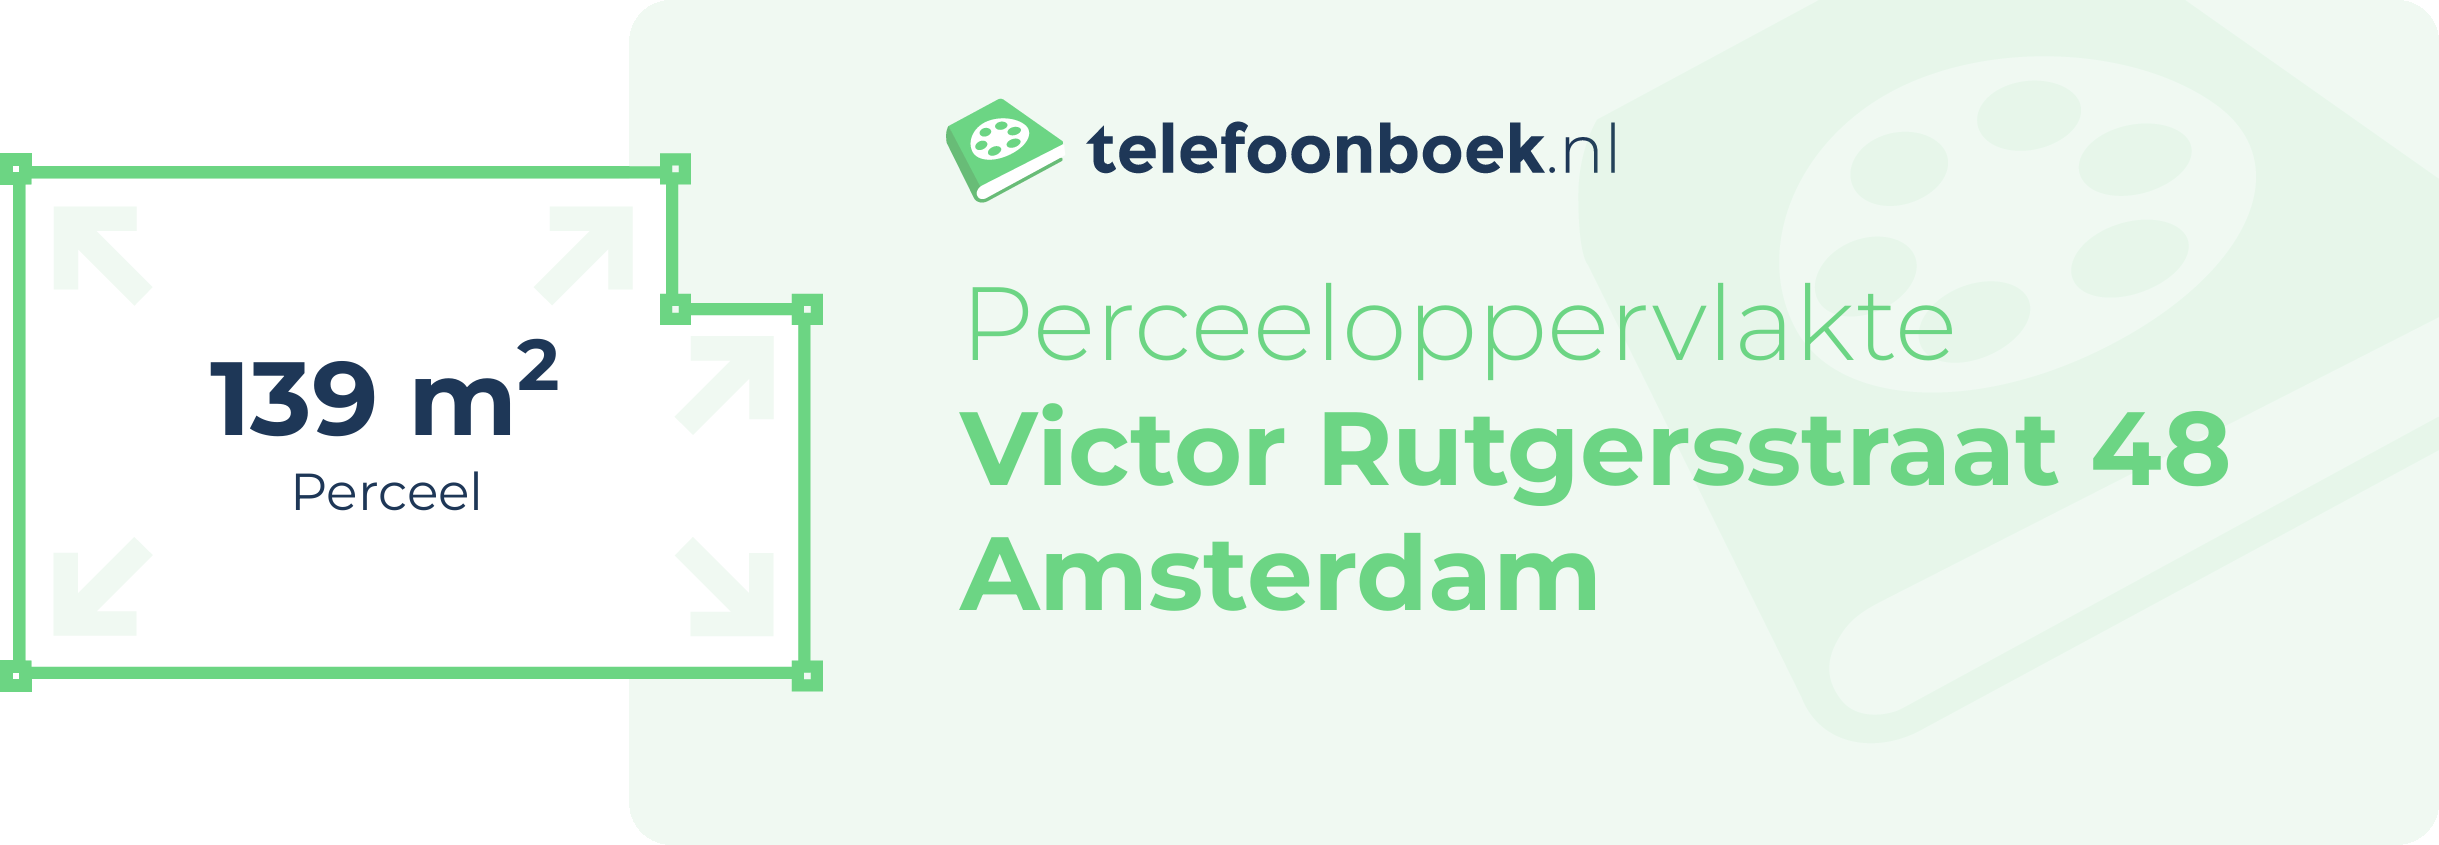 Perceeloppervlakte Victor Rutgersstraat 48 Amsterdam